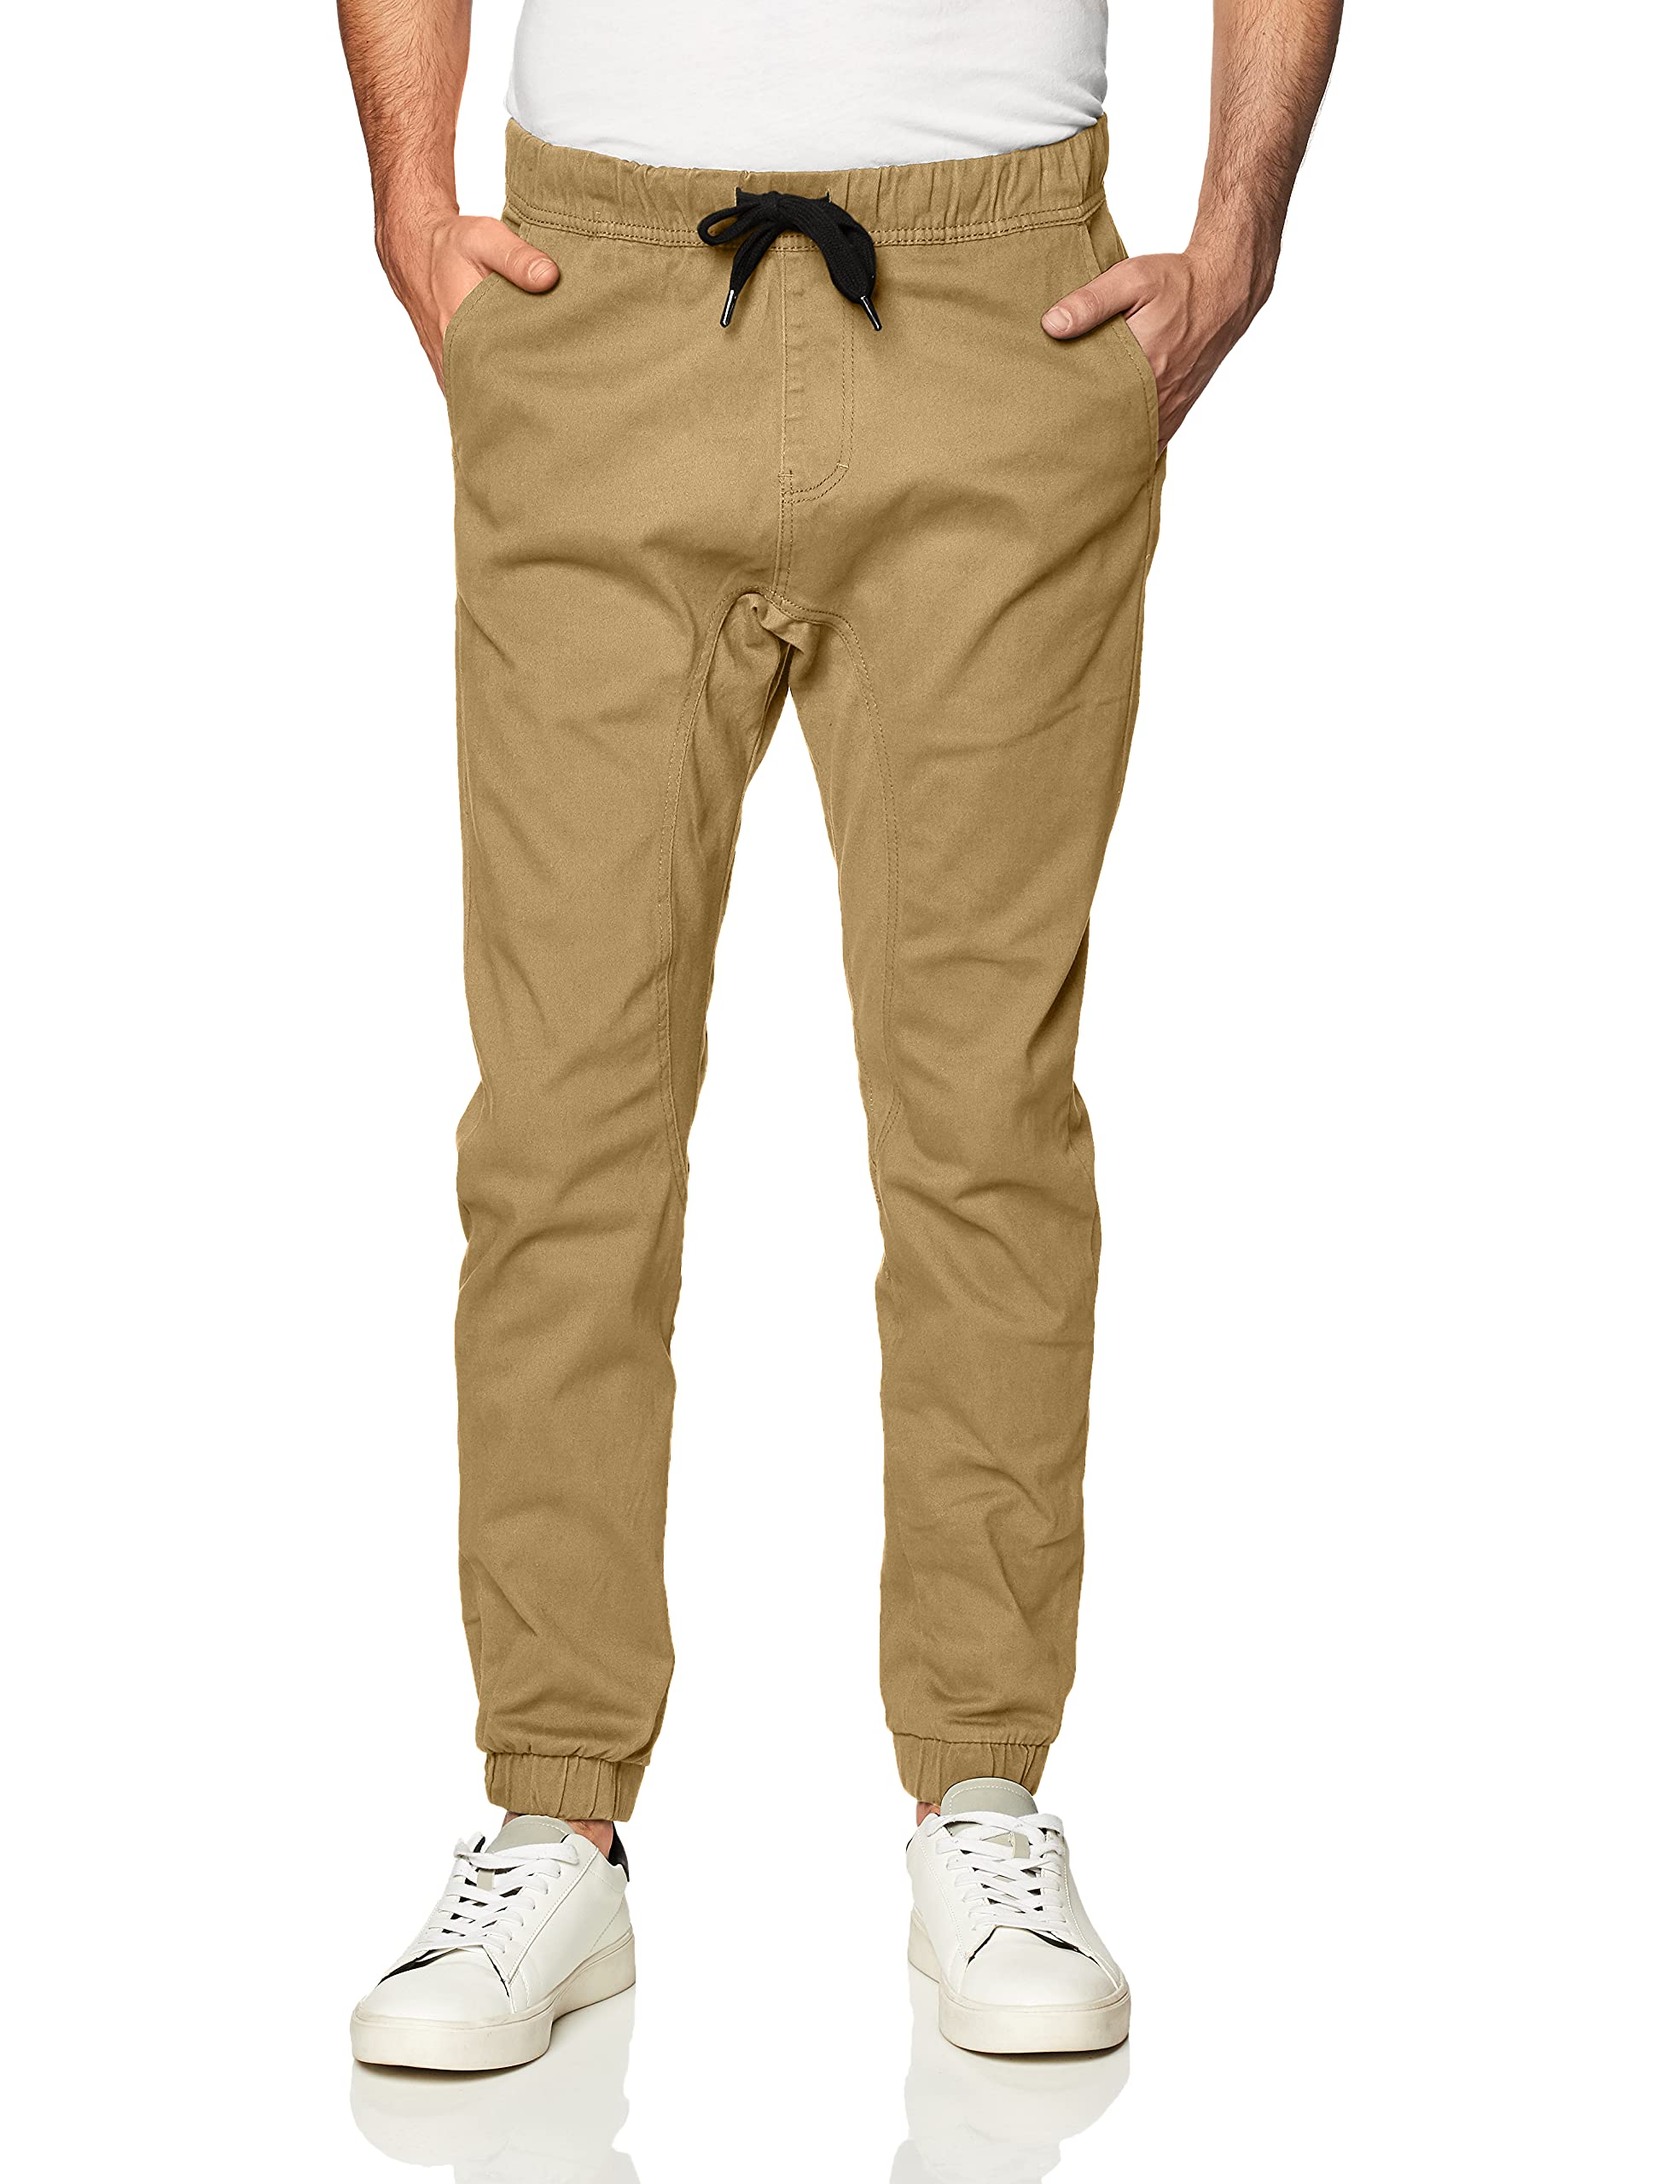 Buy KingSize Men's Big & Tall Flex Knit Cargo Pants - Tall - 40 40, Dark  Wheat at Amazon.in